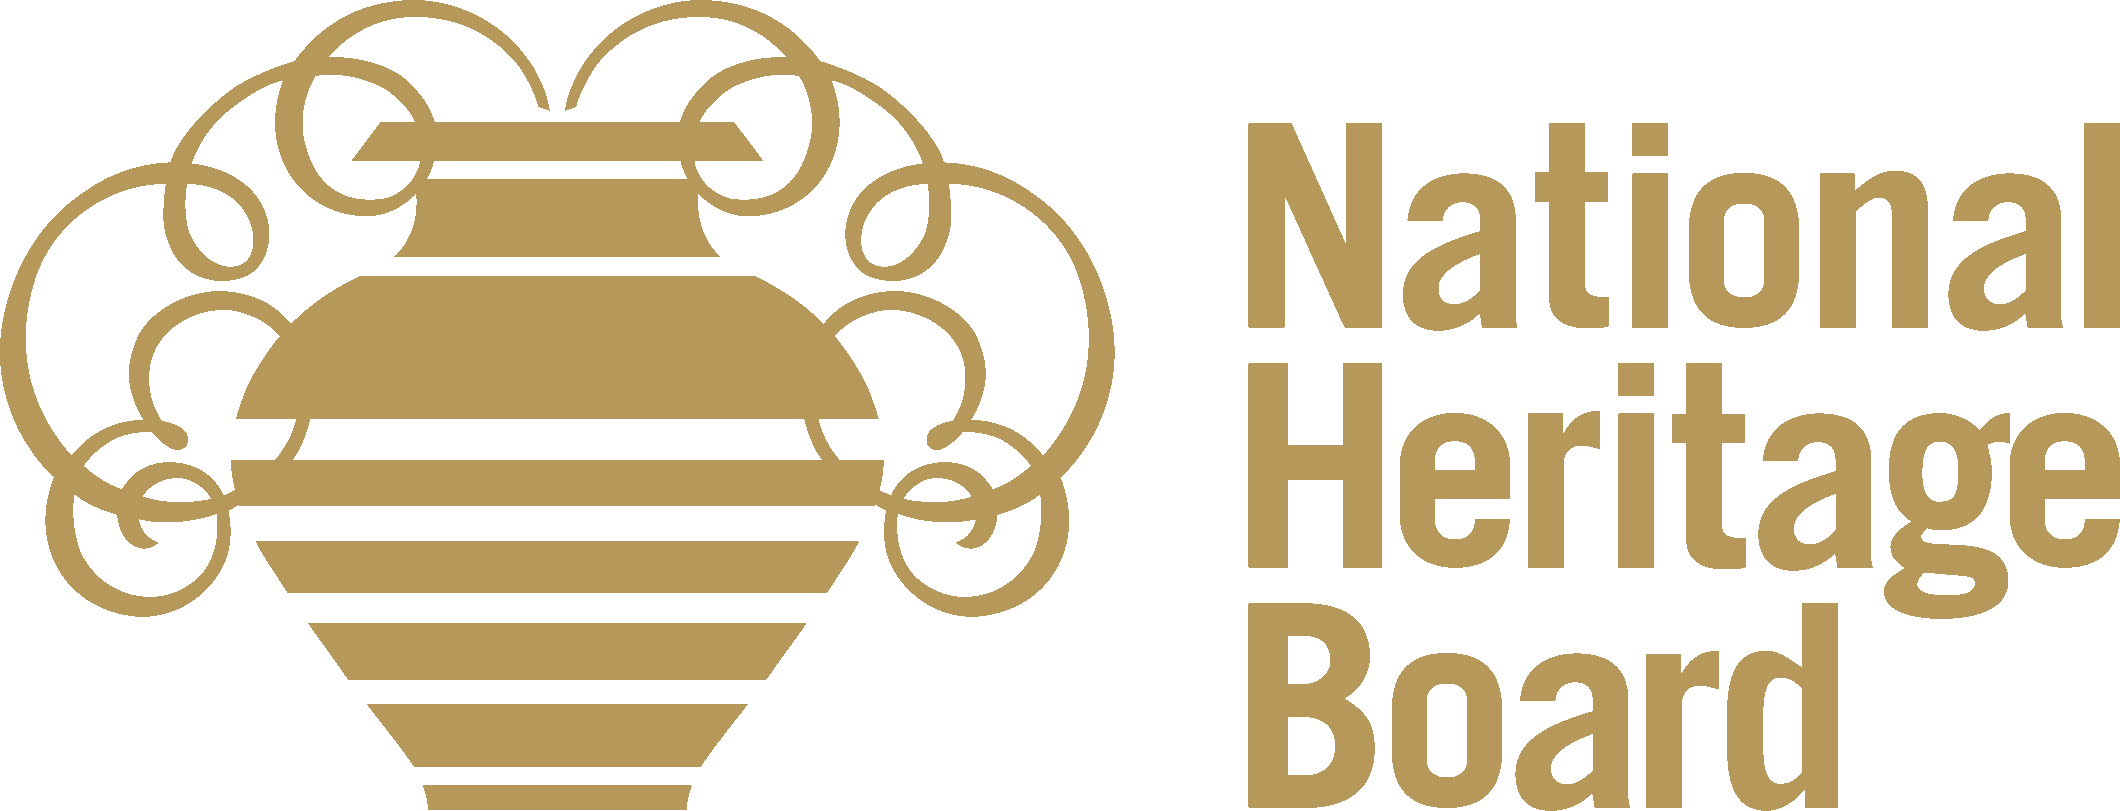 National Heritage Board 